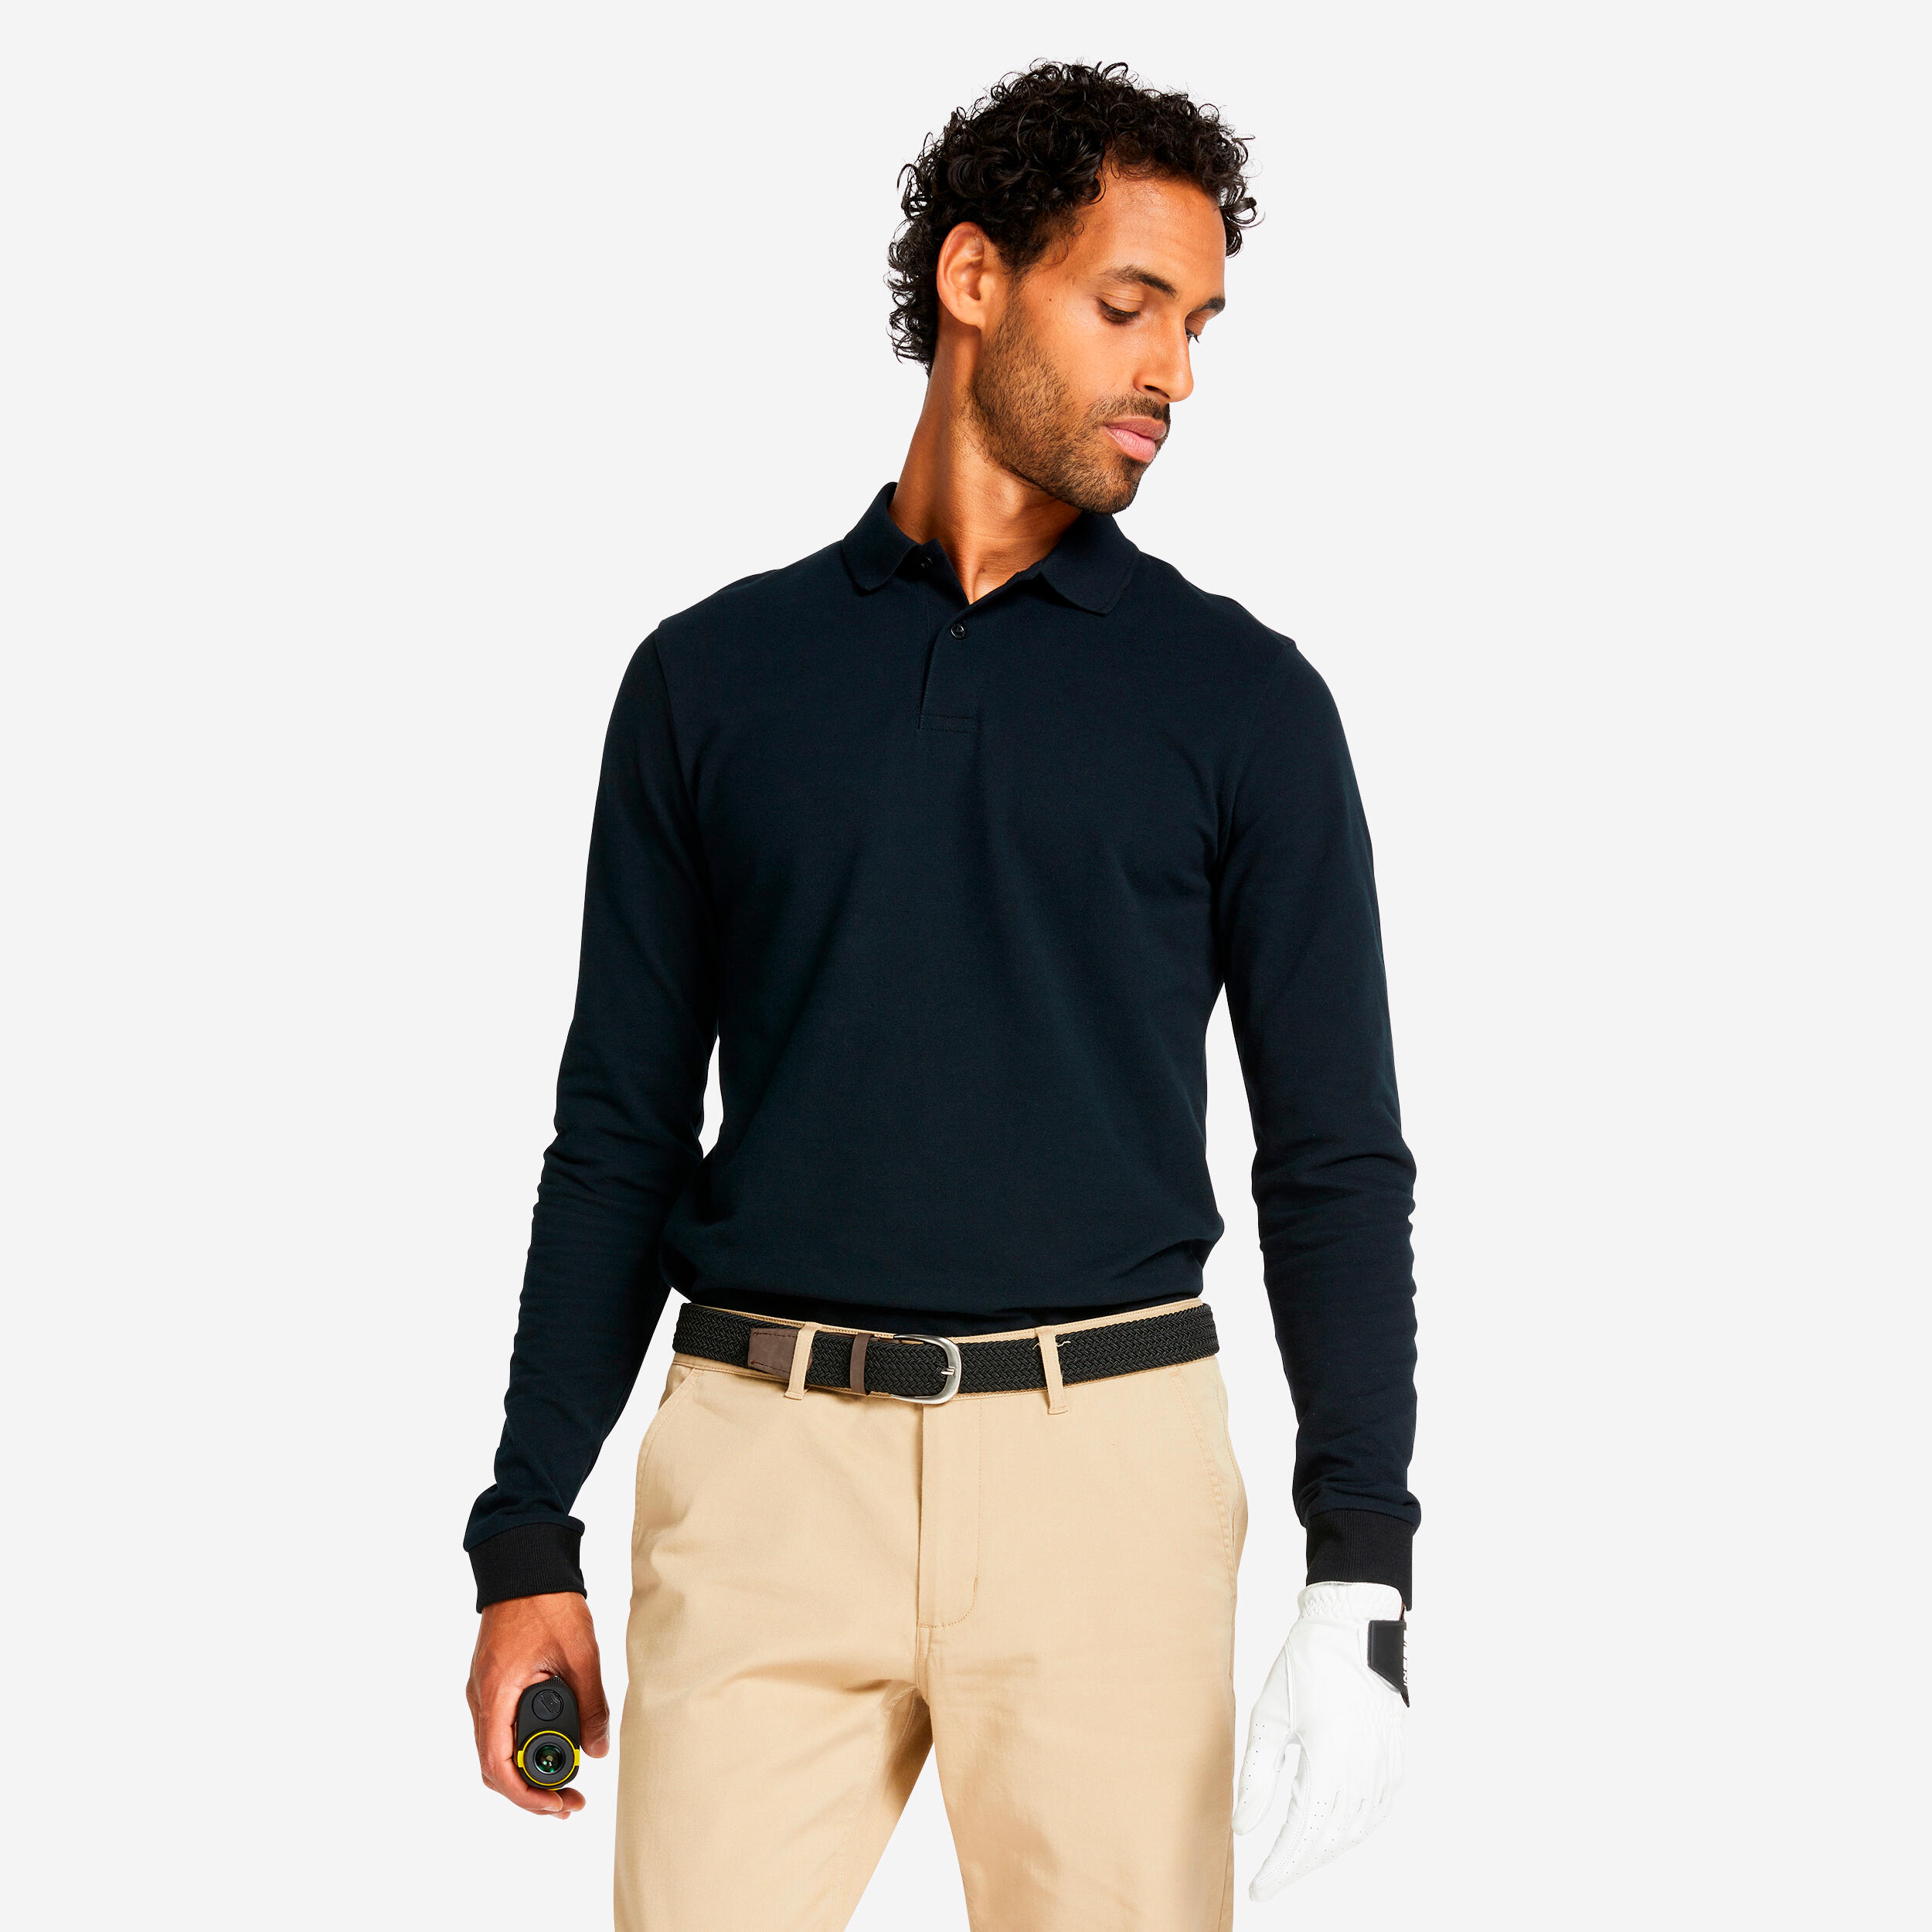 INESIS Men's golf long-sleeved polo shirt - mw500 black